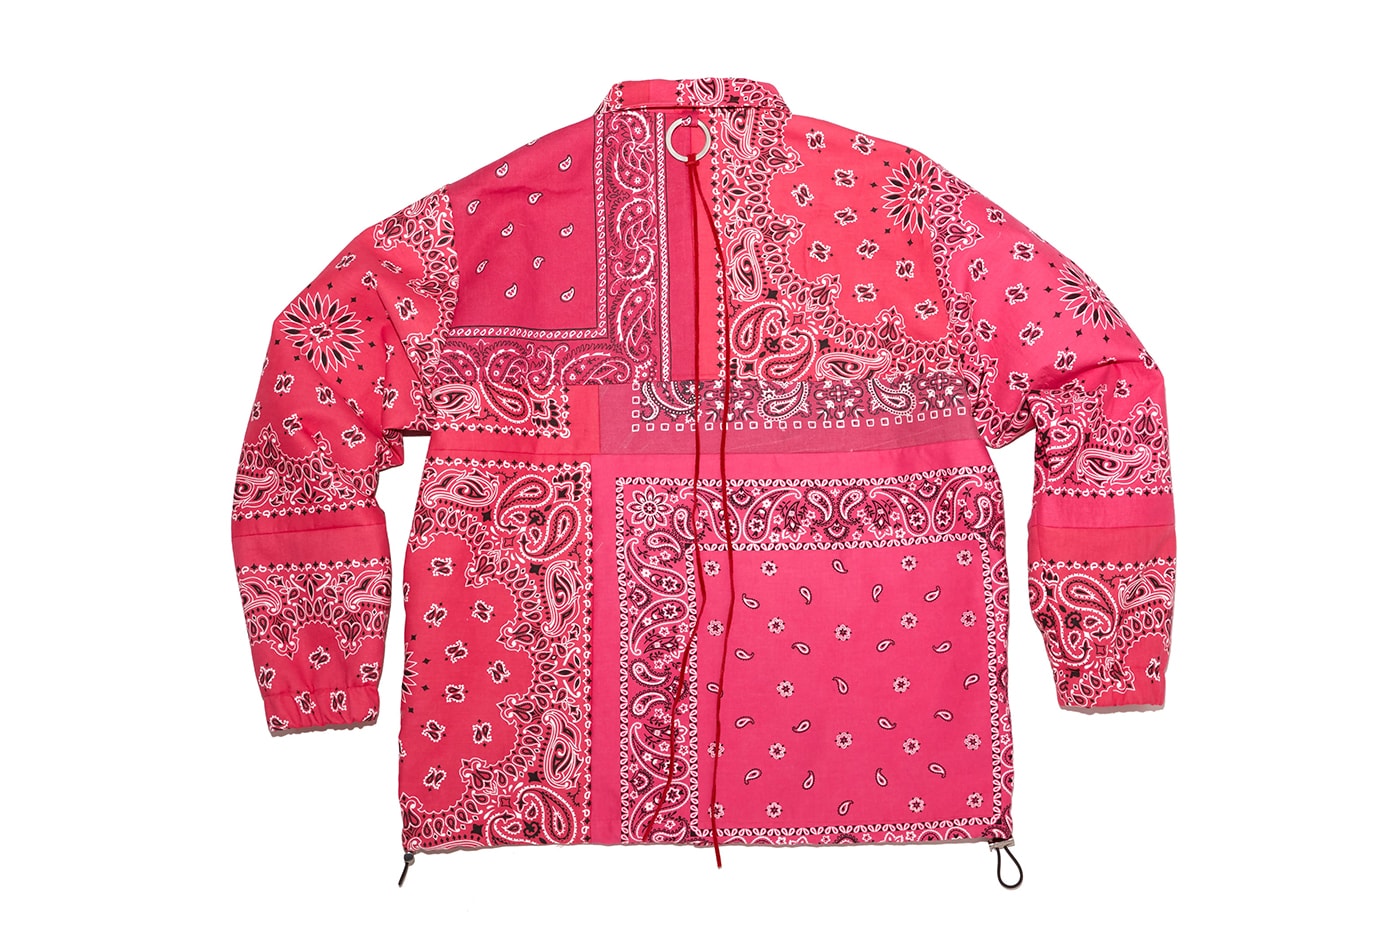 mindseeker Vintage Bandana Overfit Coach Jacket Release Info Buy Price Blue Green Yellow Orange Pink Red Purple